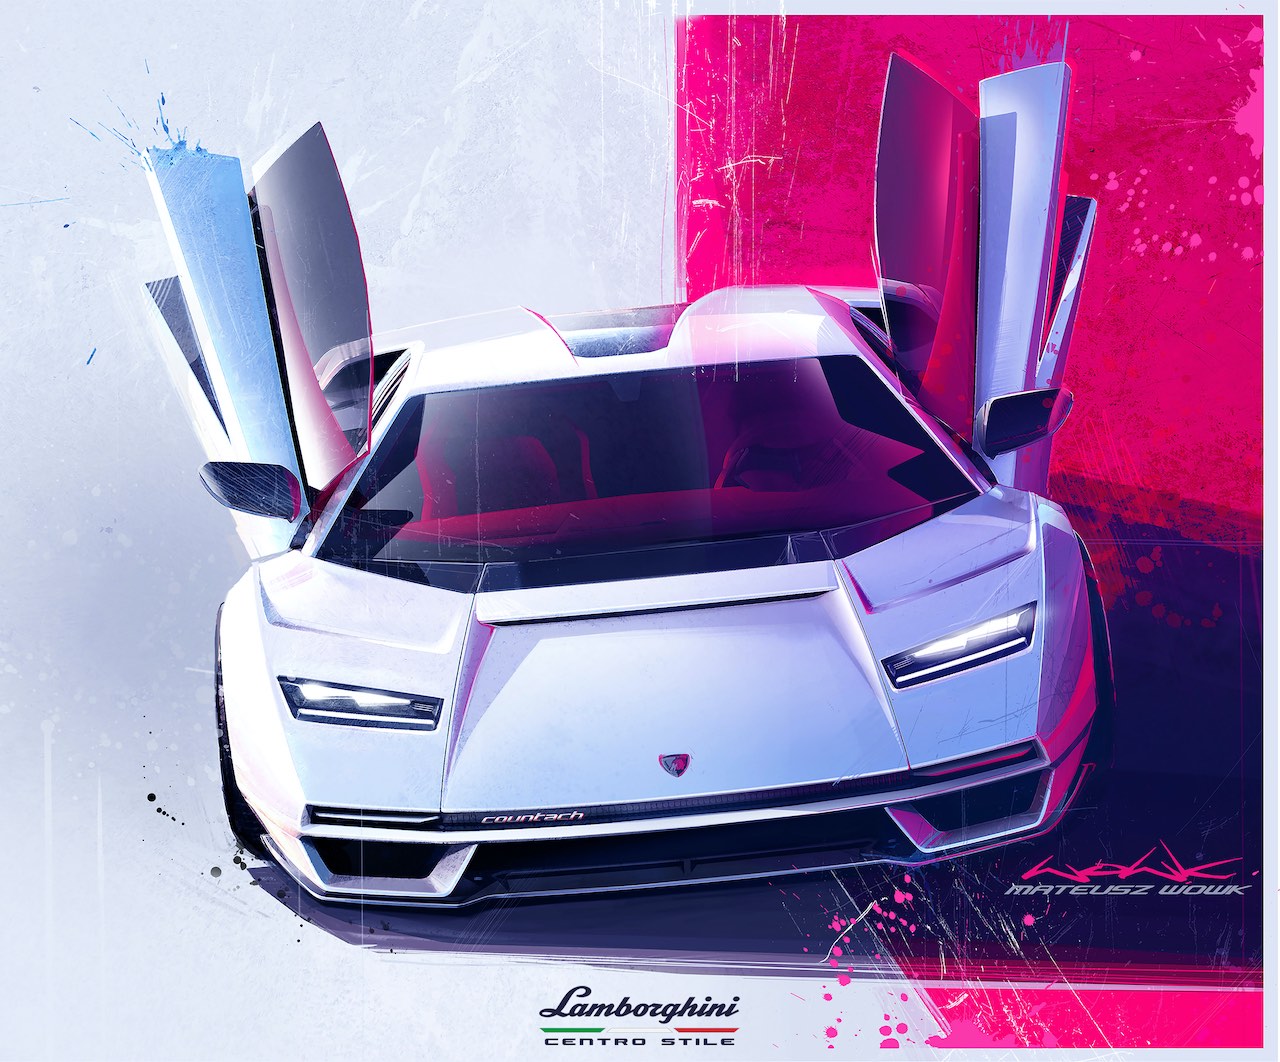 Lamborghini is bringing back the legendary Countach